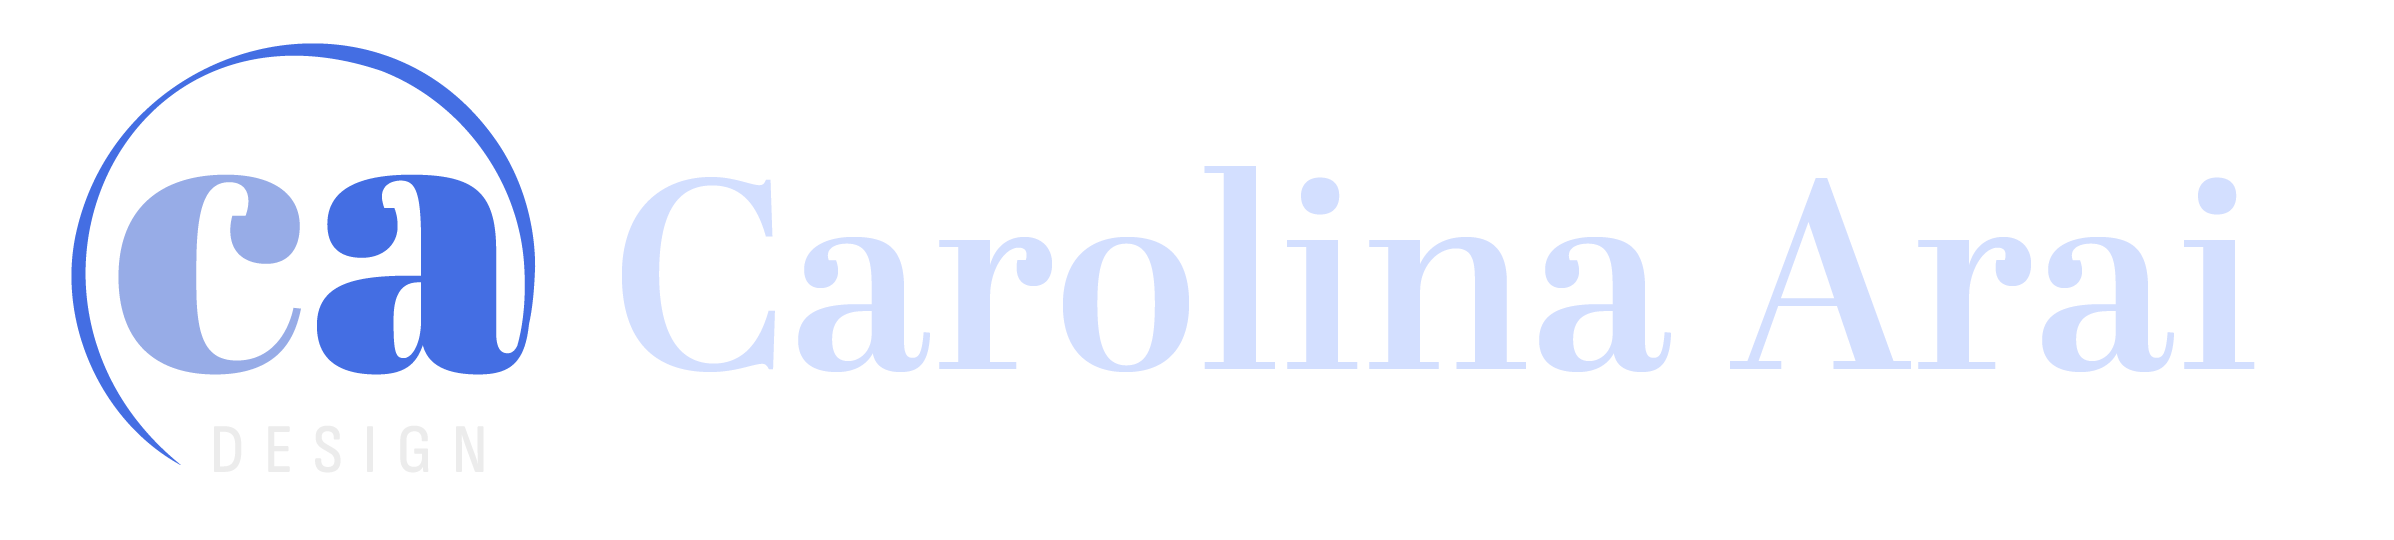 Carolina Arai Design Logo